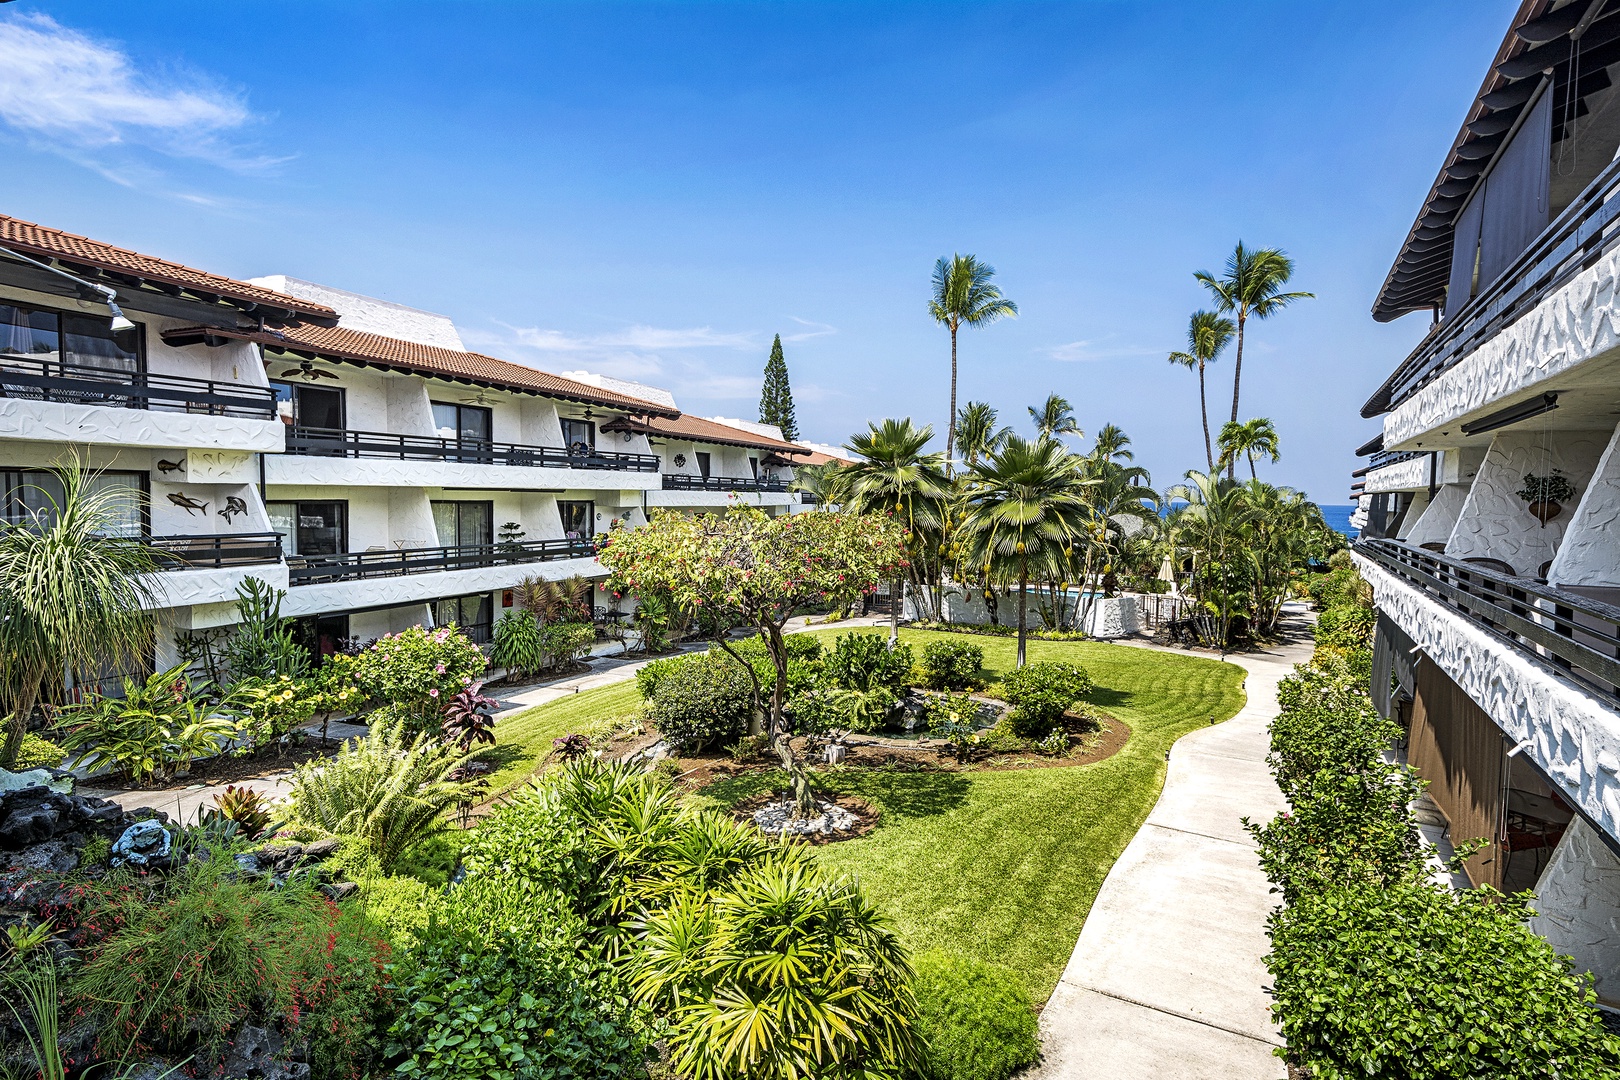 Kailua Kona Vacation Rentals, Casa De Emdeko 104 - View of the manicured landscape